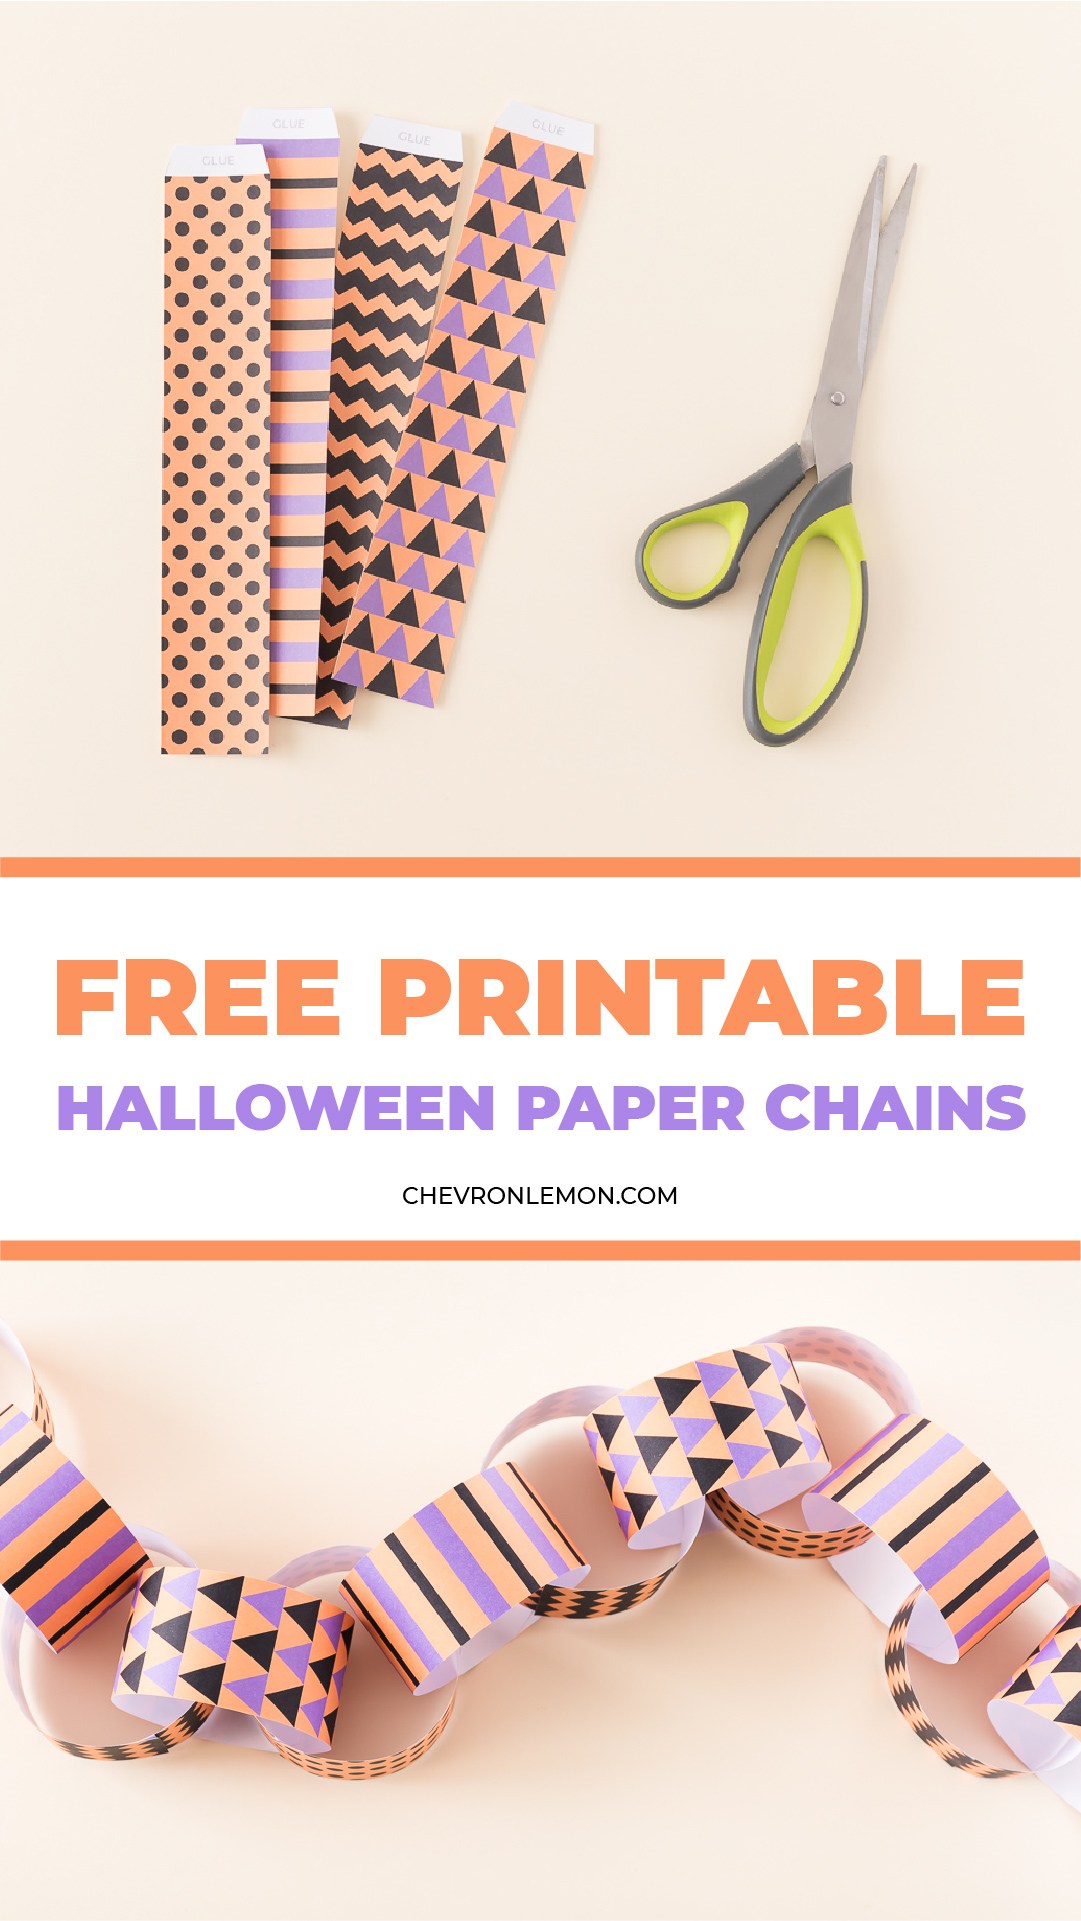 Printable Halloween paper chains